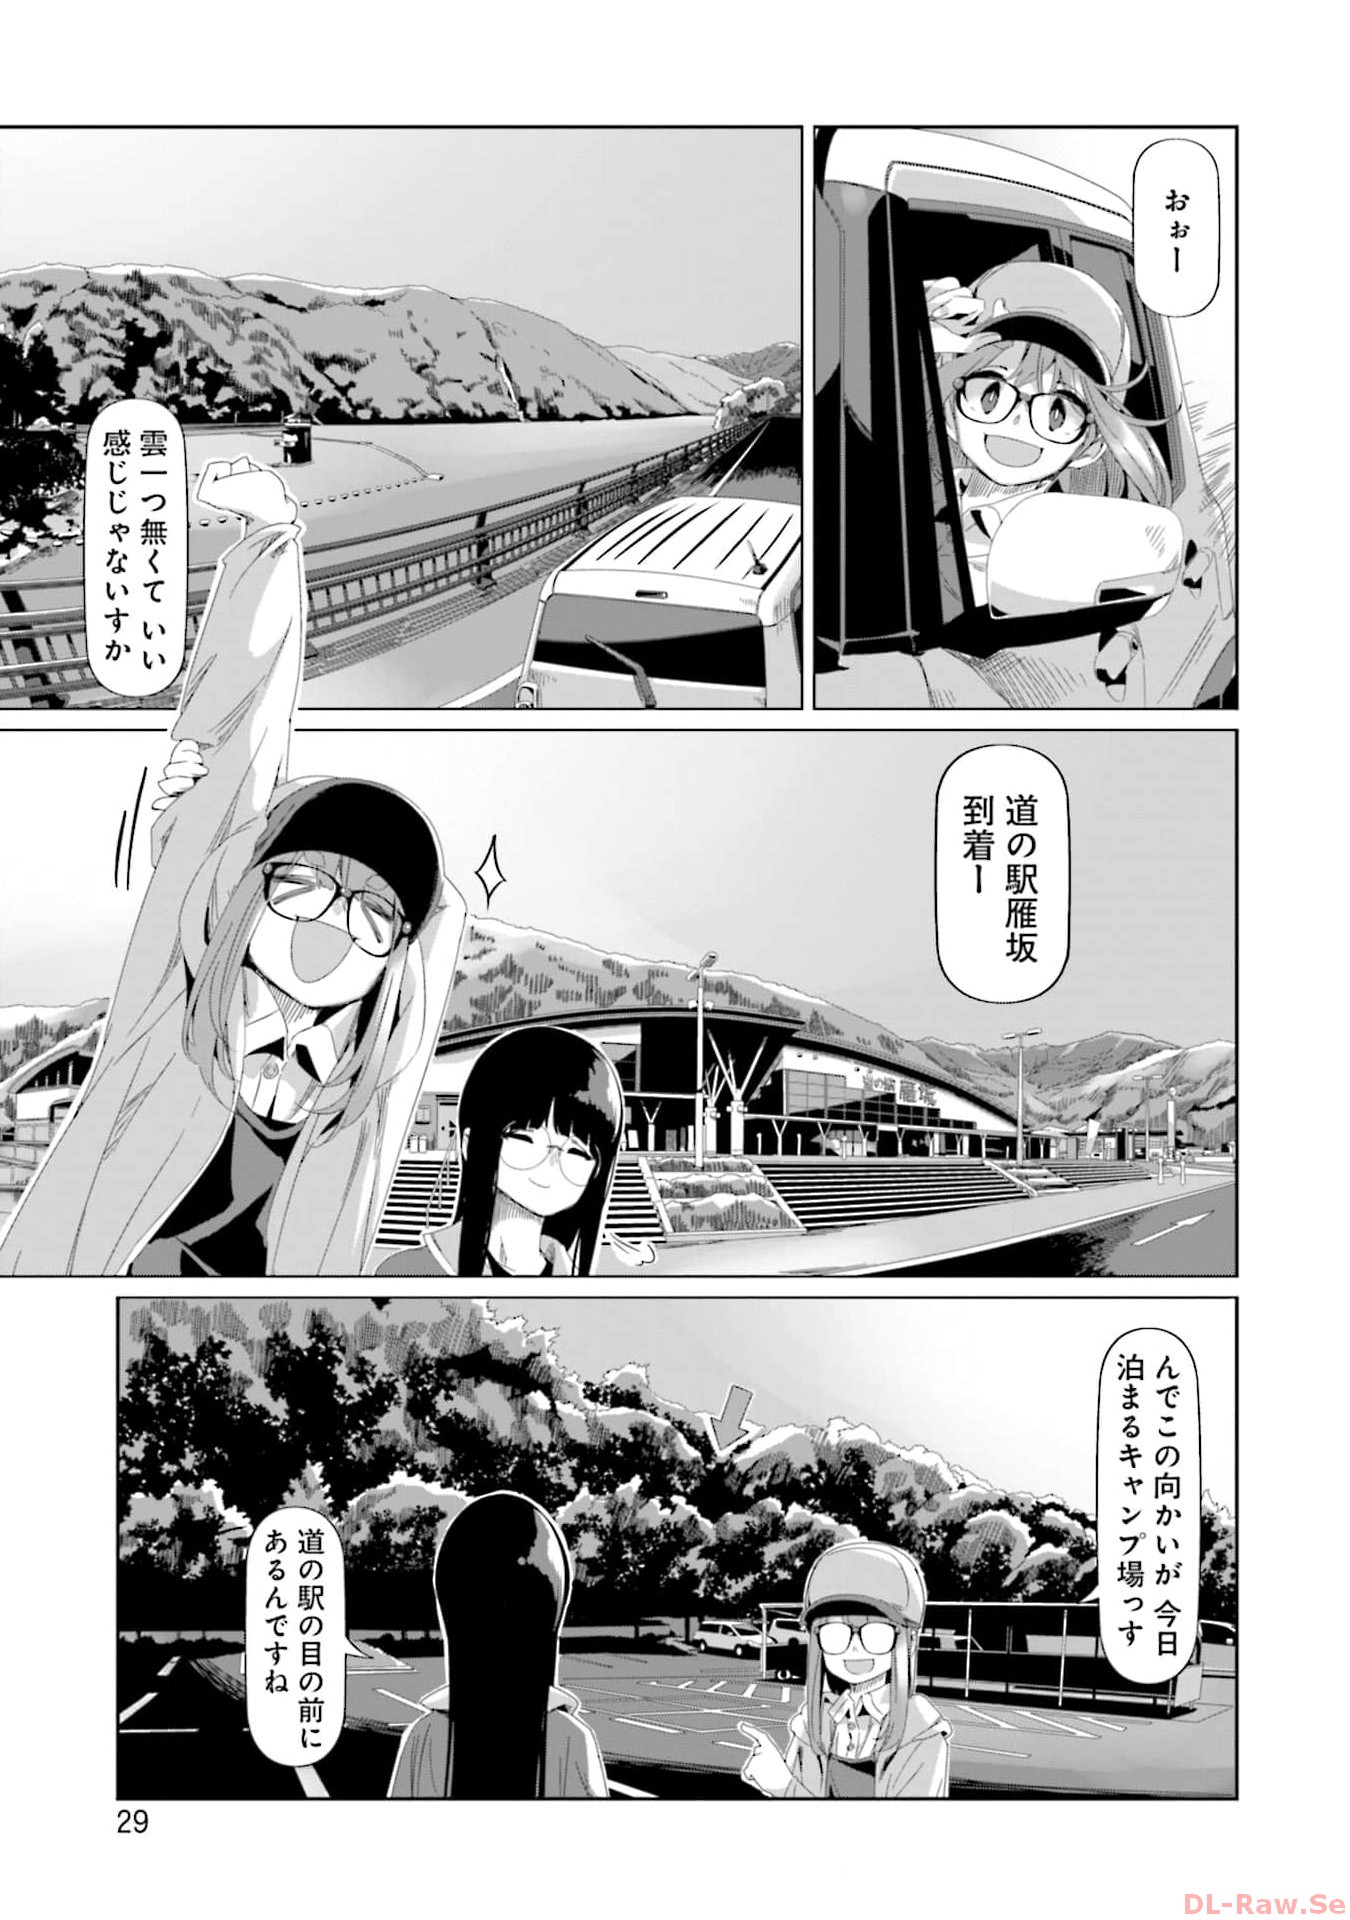 Yuru Camp - Chapter 83 - Page 1